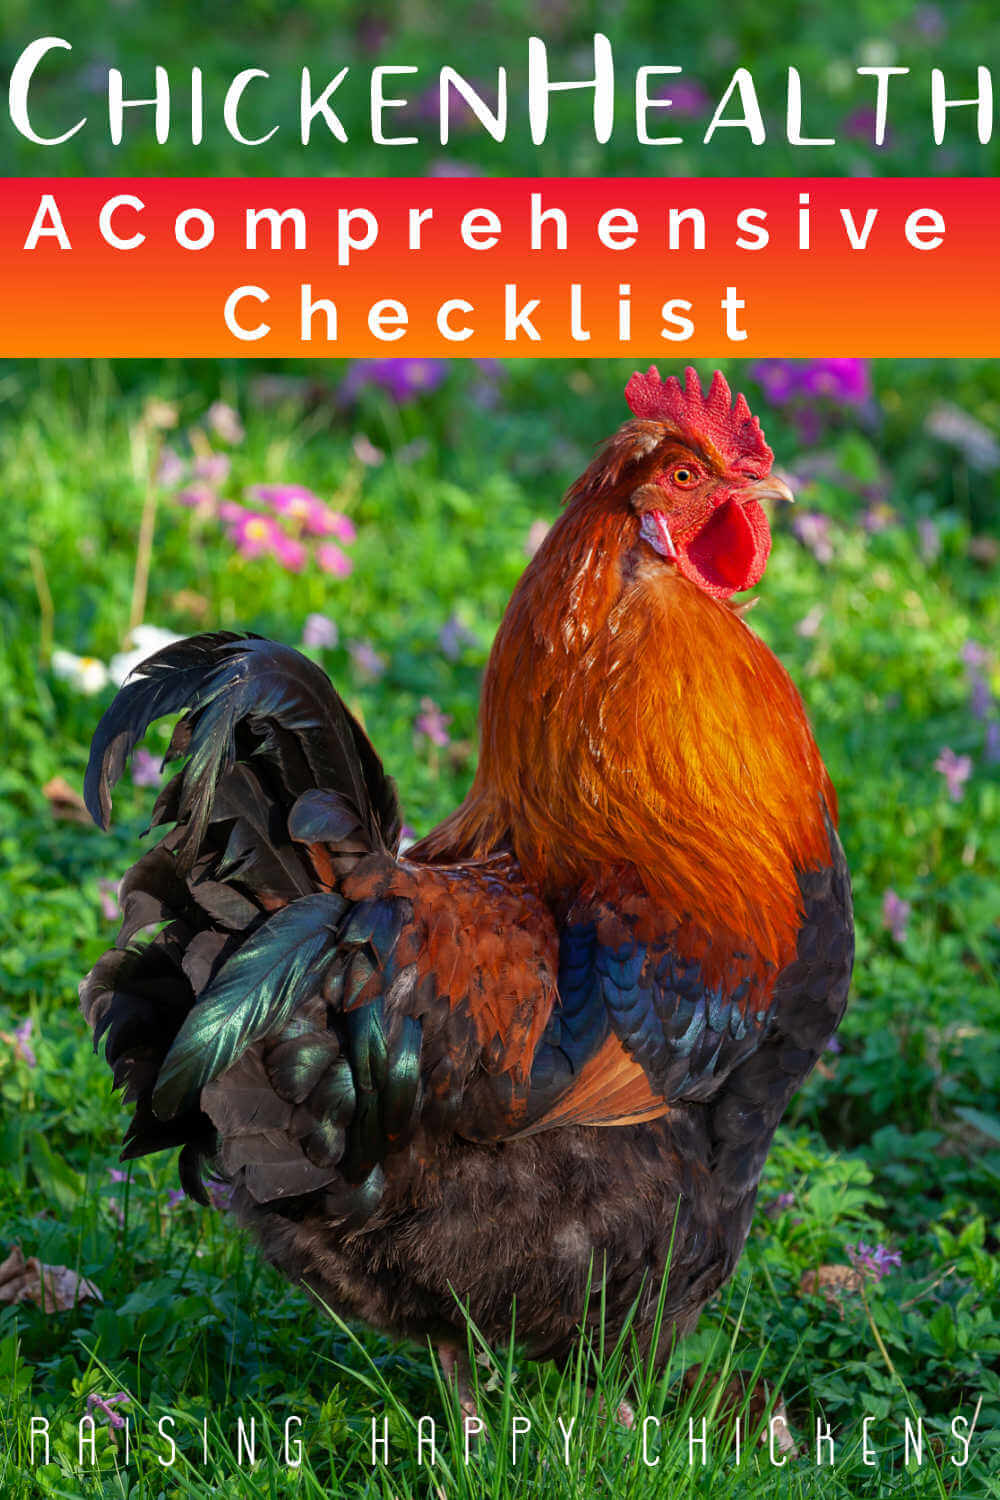 https://www.raising-happy-chickens.com/images/chicken-health-checksheet.jpeg